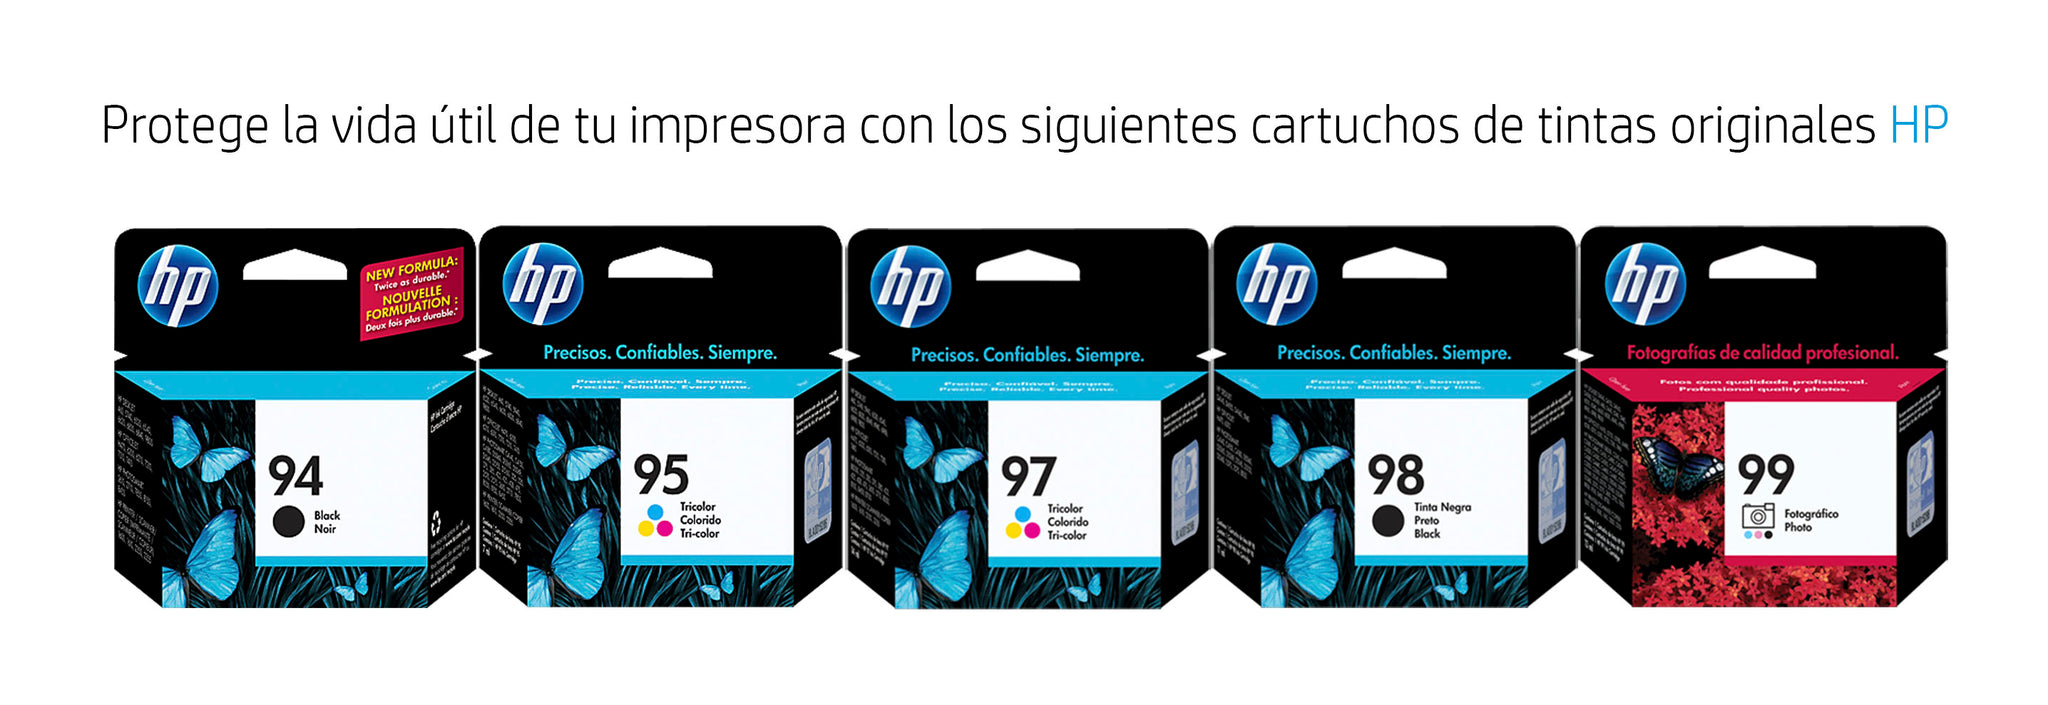 IMPRESORA PORTATIL HP OFFICEJET 100 MOBILE CN551A – HP Store Ecuador